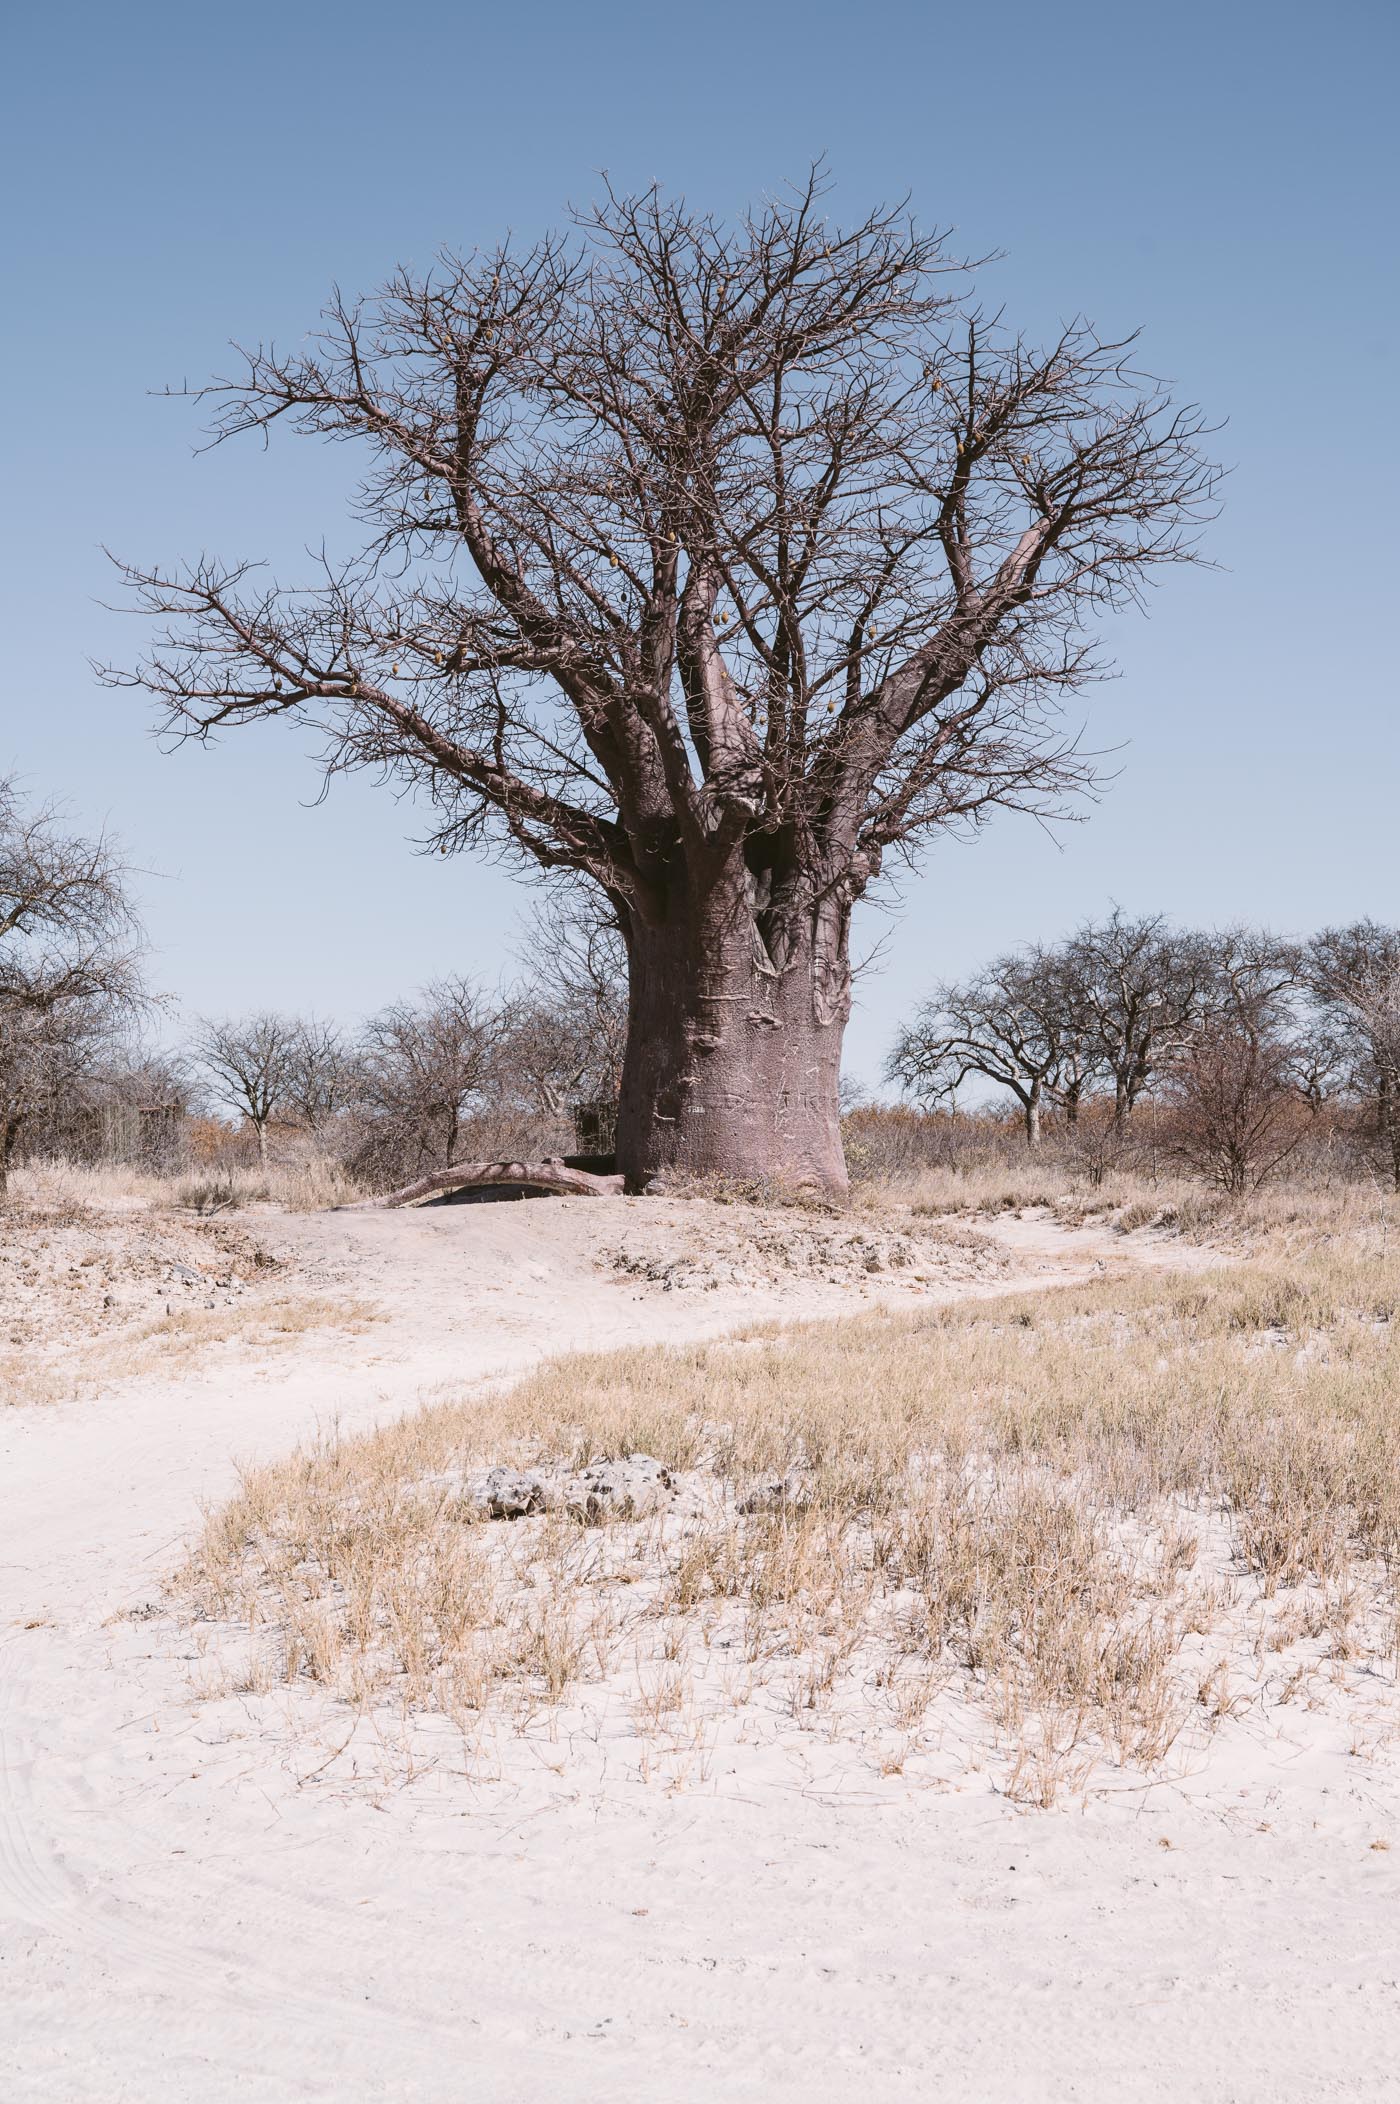 Baines Baobabs in the Nxai Pan National Park in Botswana